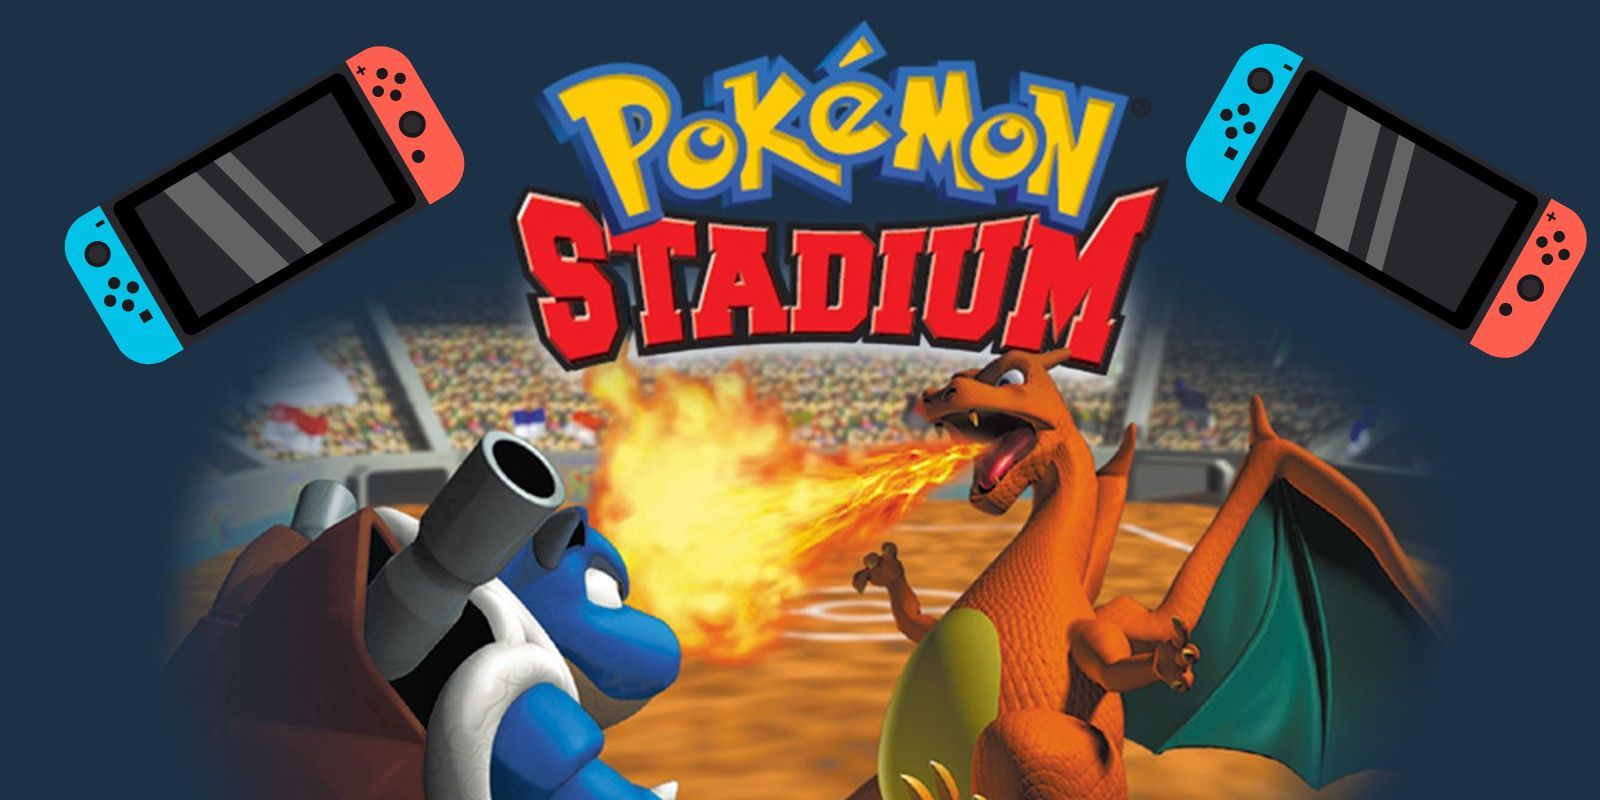 Does Pokémon Stadium On Switch Have Online Multiplayer